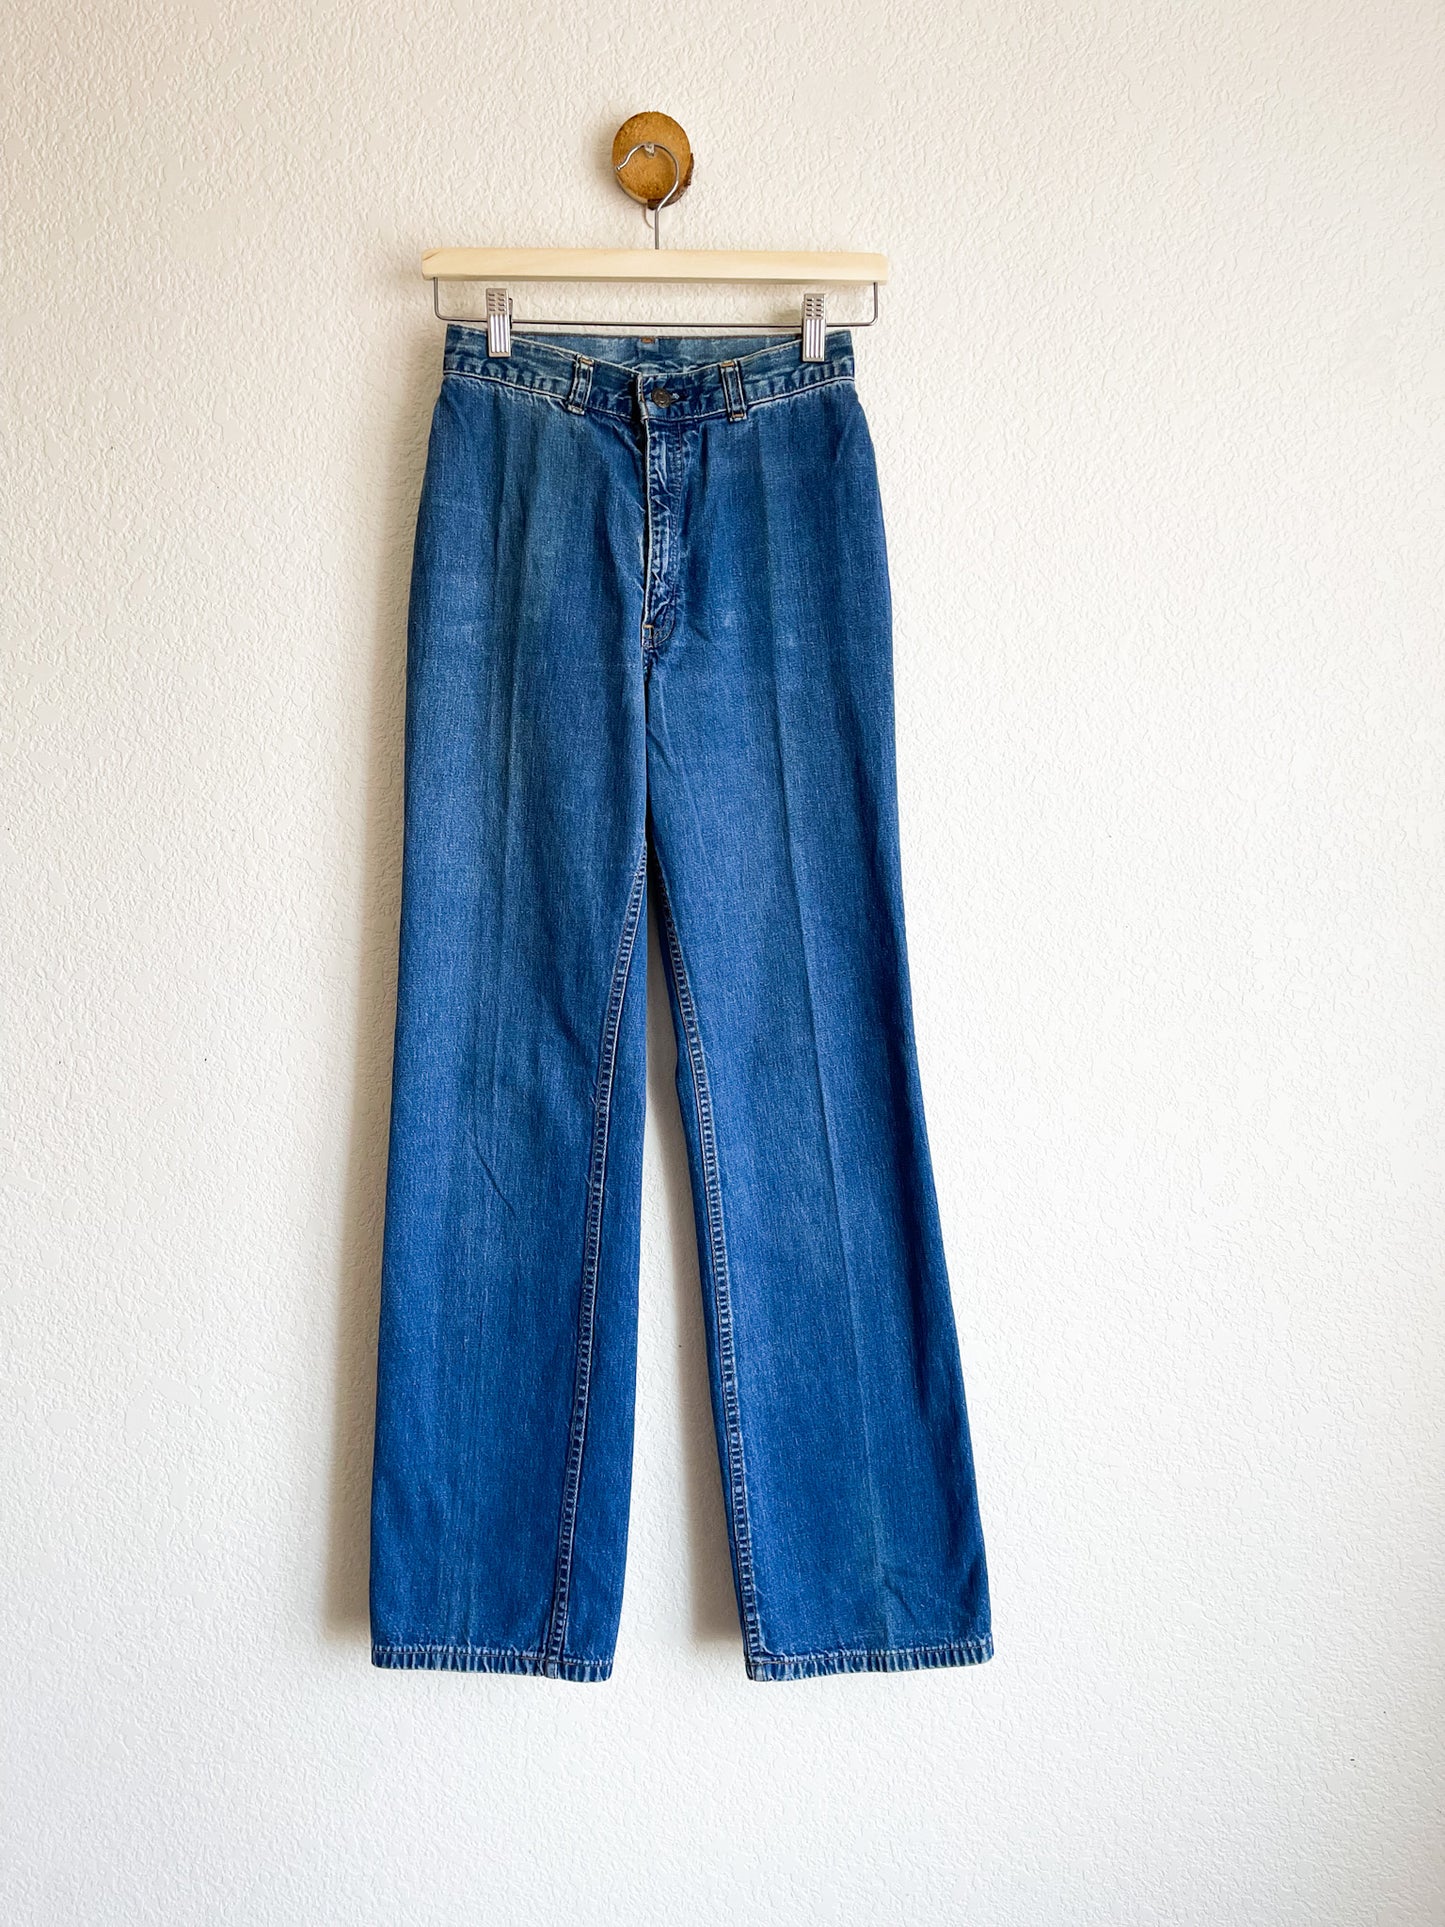 Vintage Levi's Owner's Favorite Pair Jeans - 25" Waist